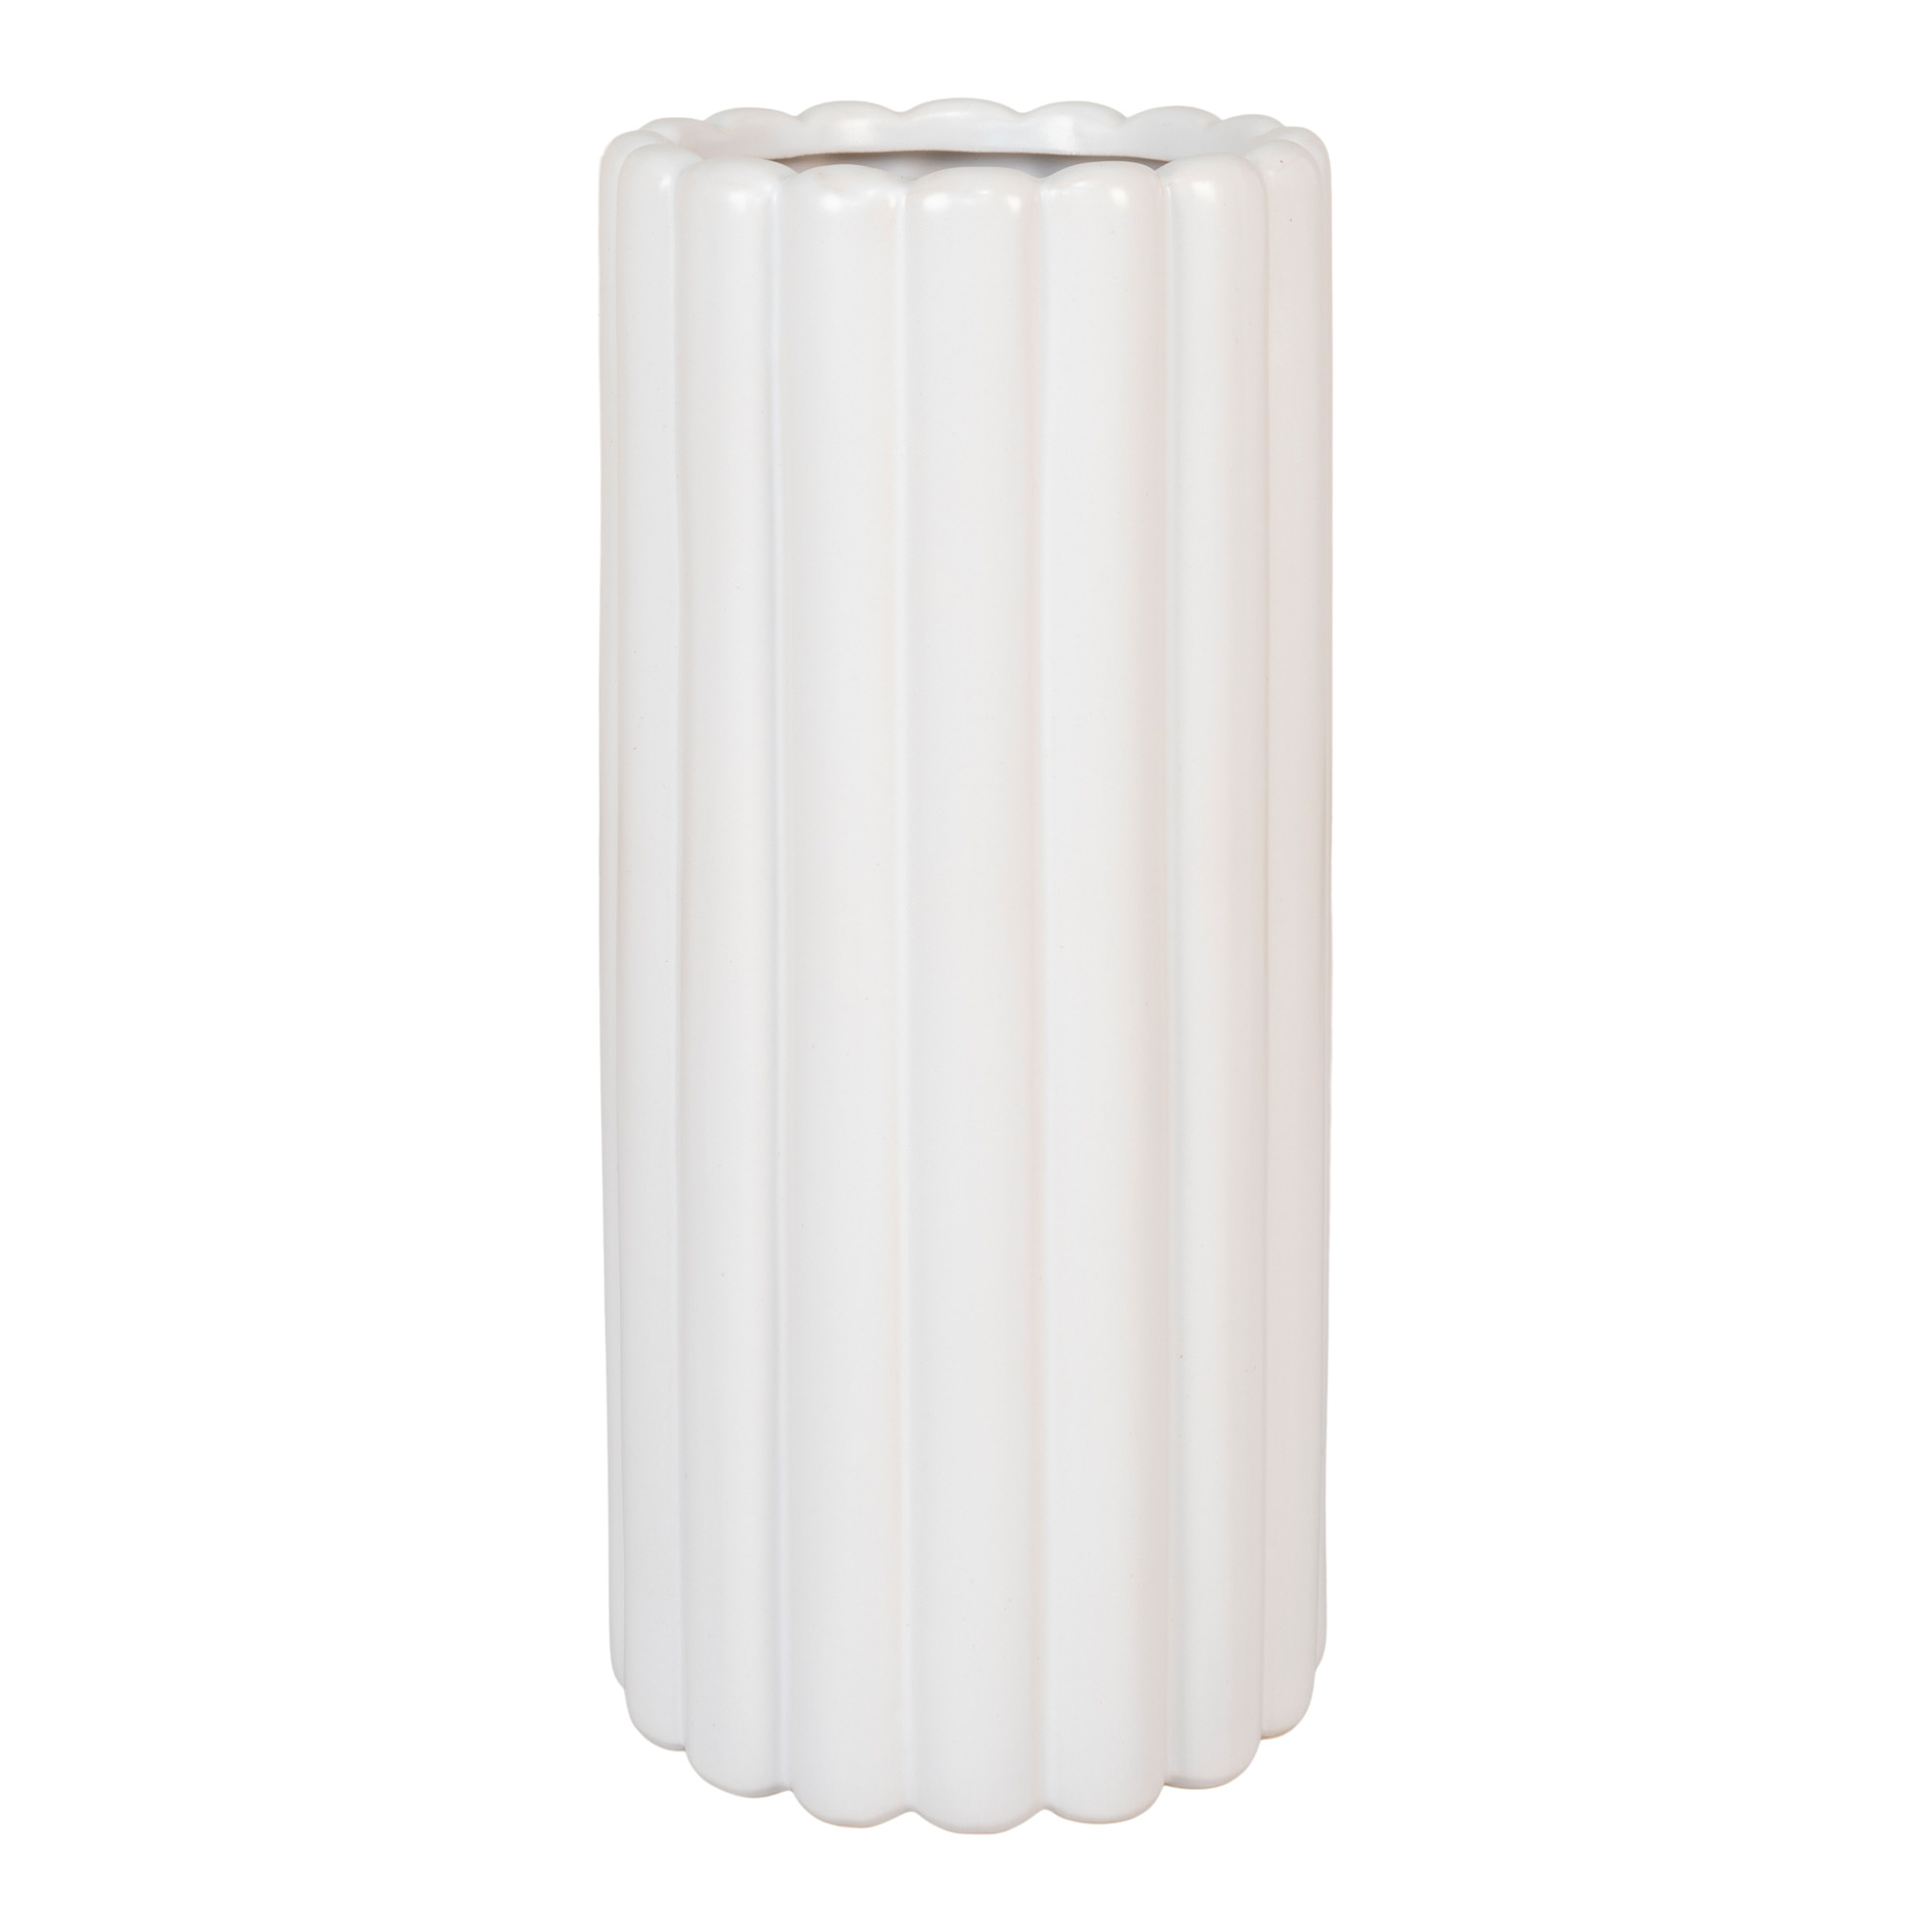 HOUSE NORDIC vase med riller, rund - hvid keramik (H:25)